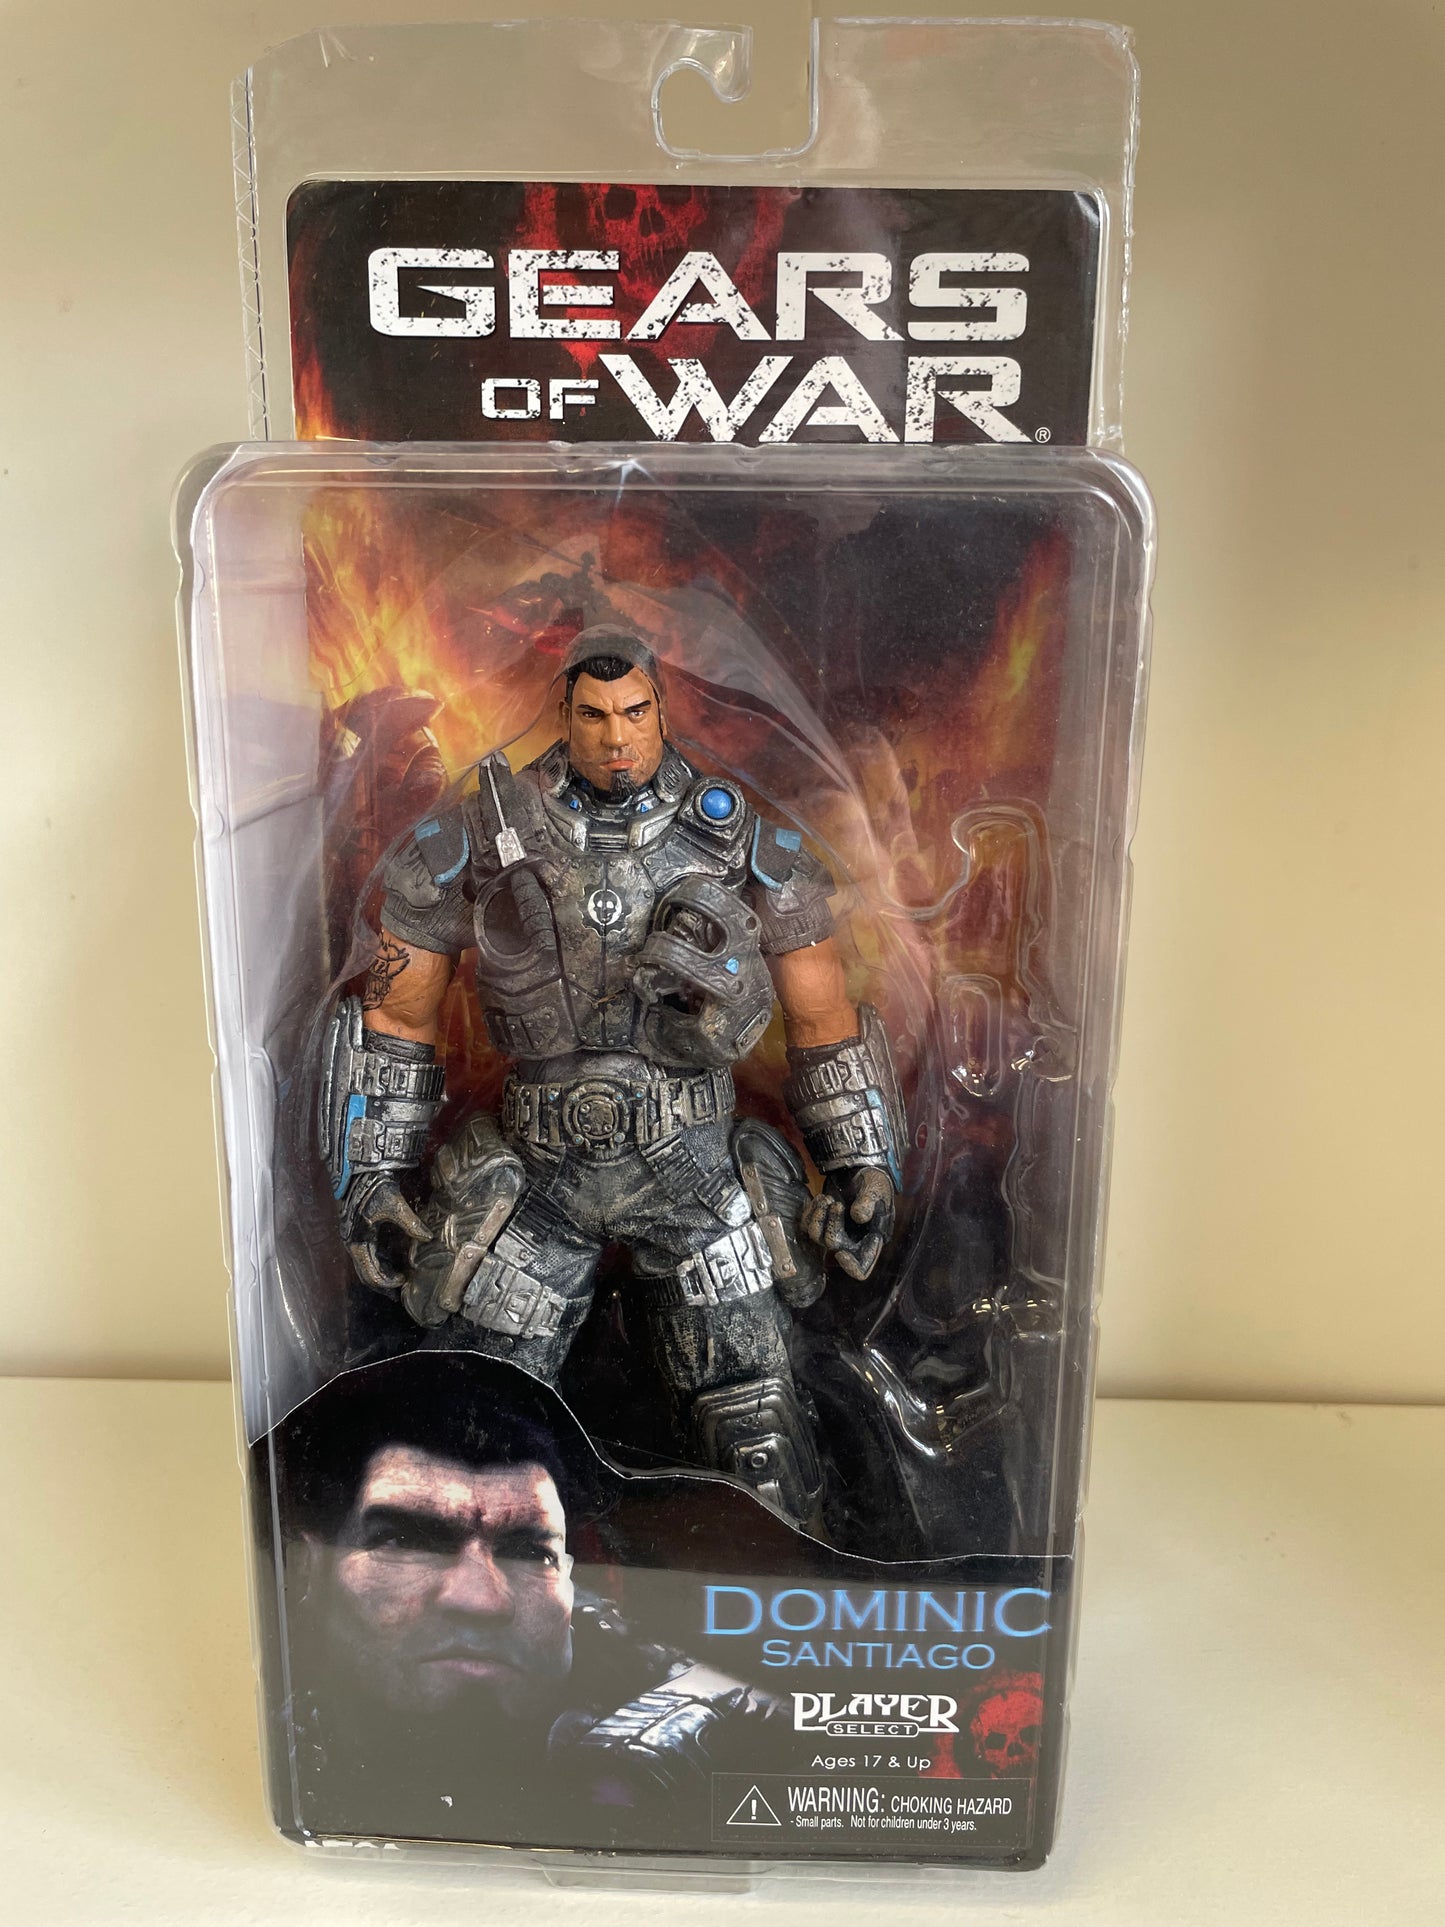 Neca Gears of War Dominic Santiago Action Figure Sealed